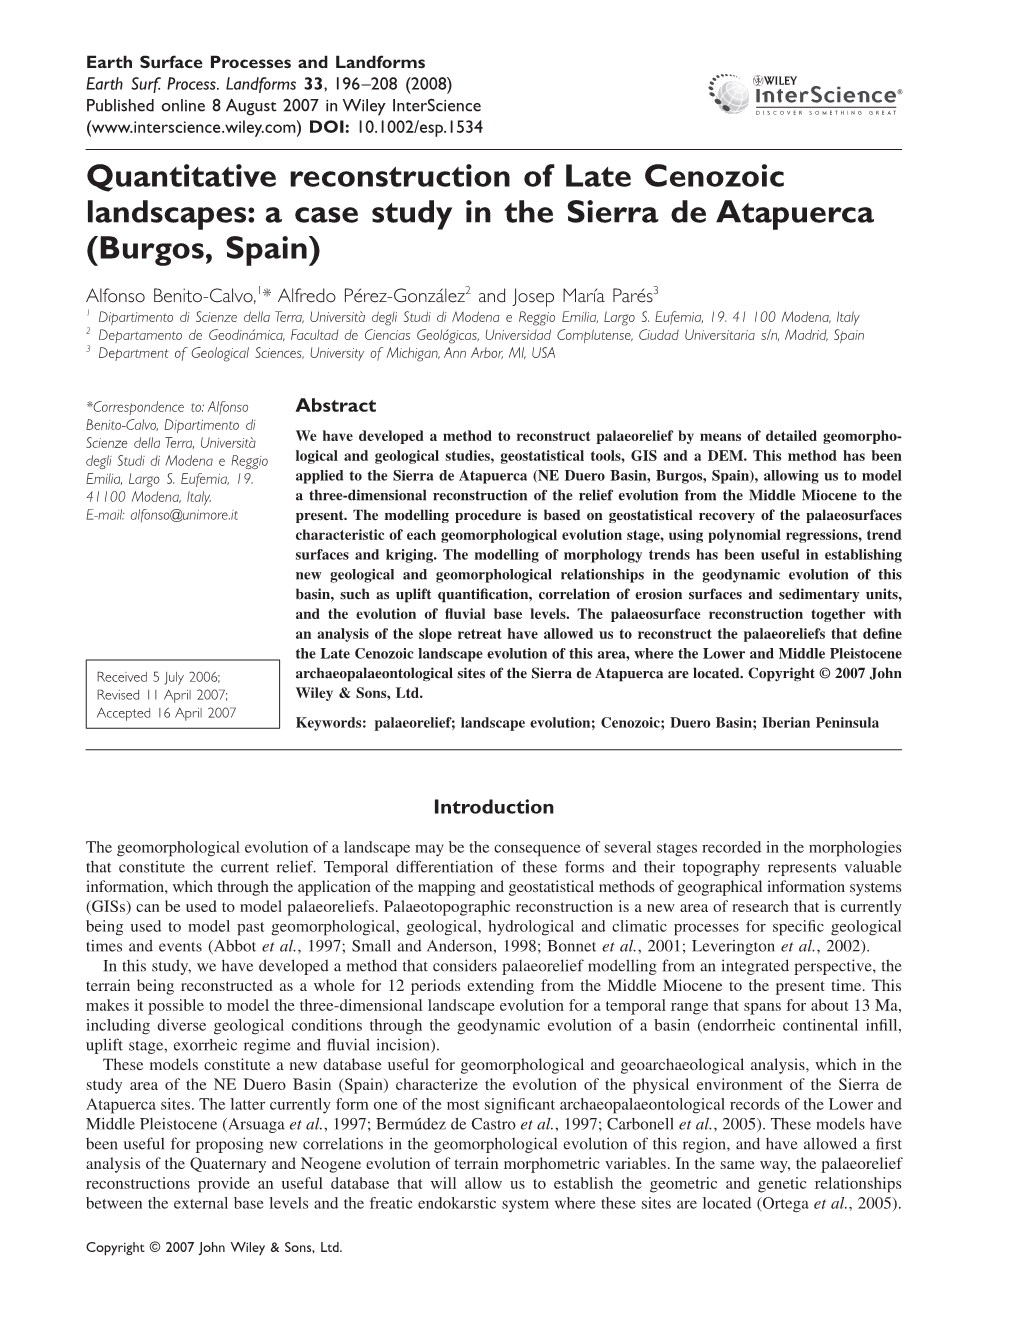 Quantitative Reconstruction of Late Cenozoic Landscapes: a Case Study in the Sierra De Atapuerca (Burgos, Spain)